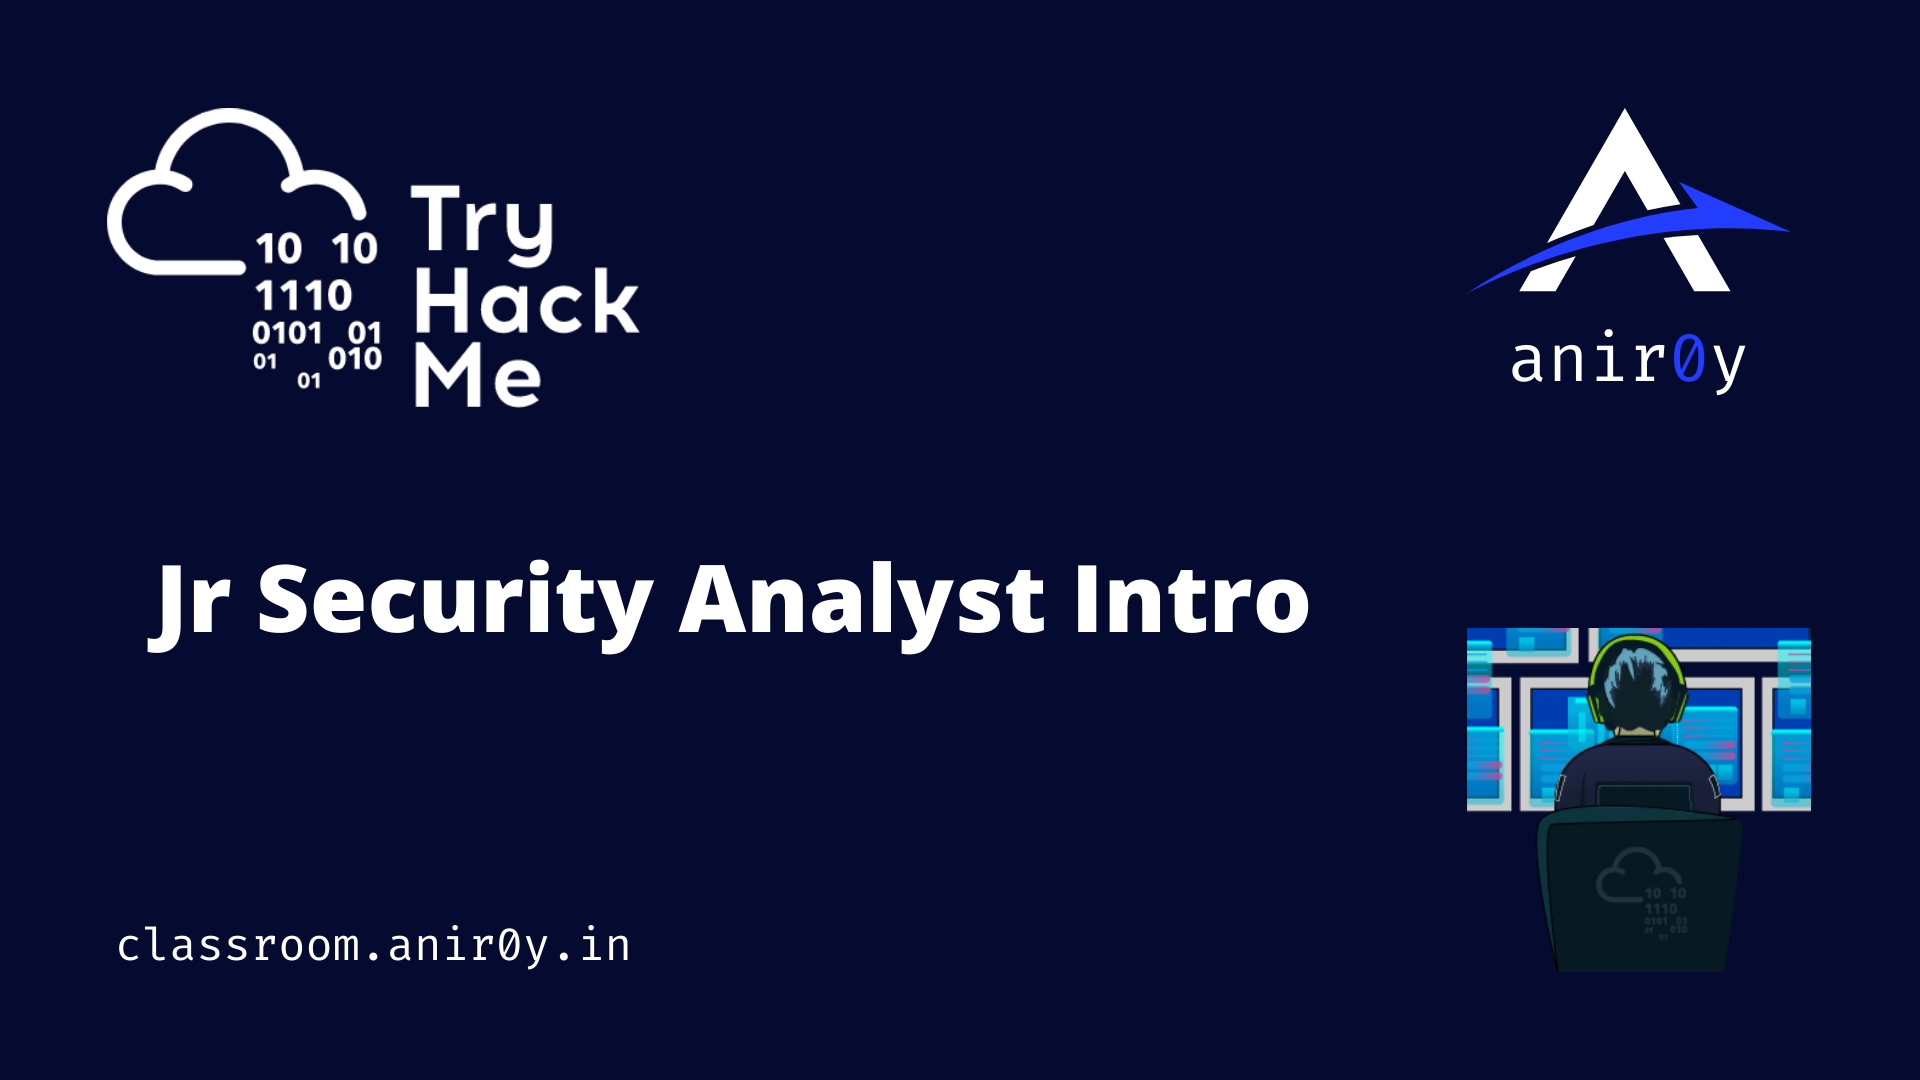 TryHackMe Jr Security Analyst Intro